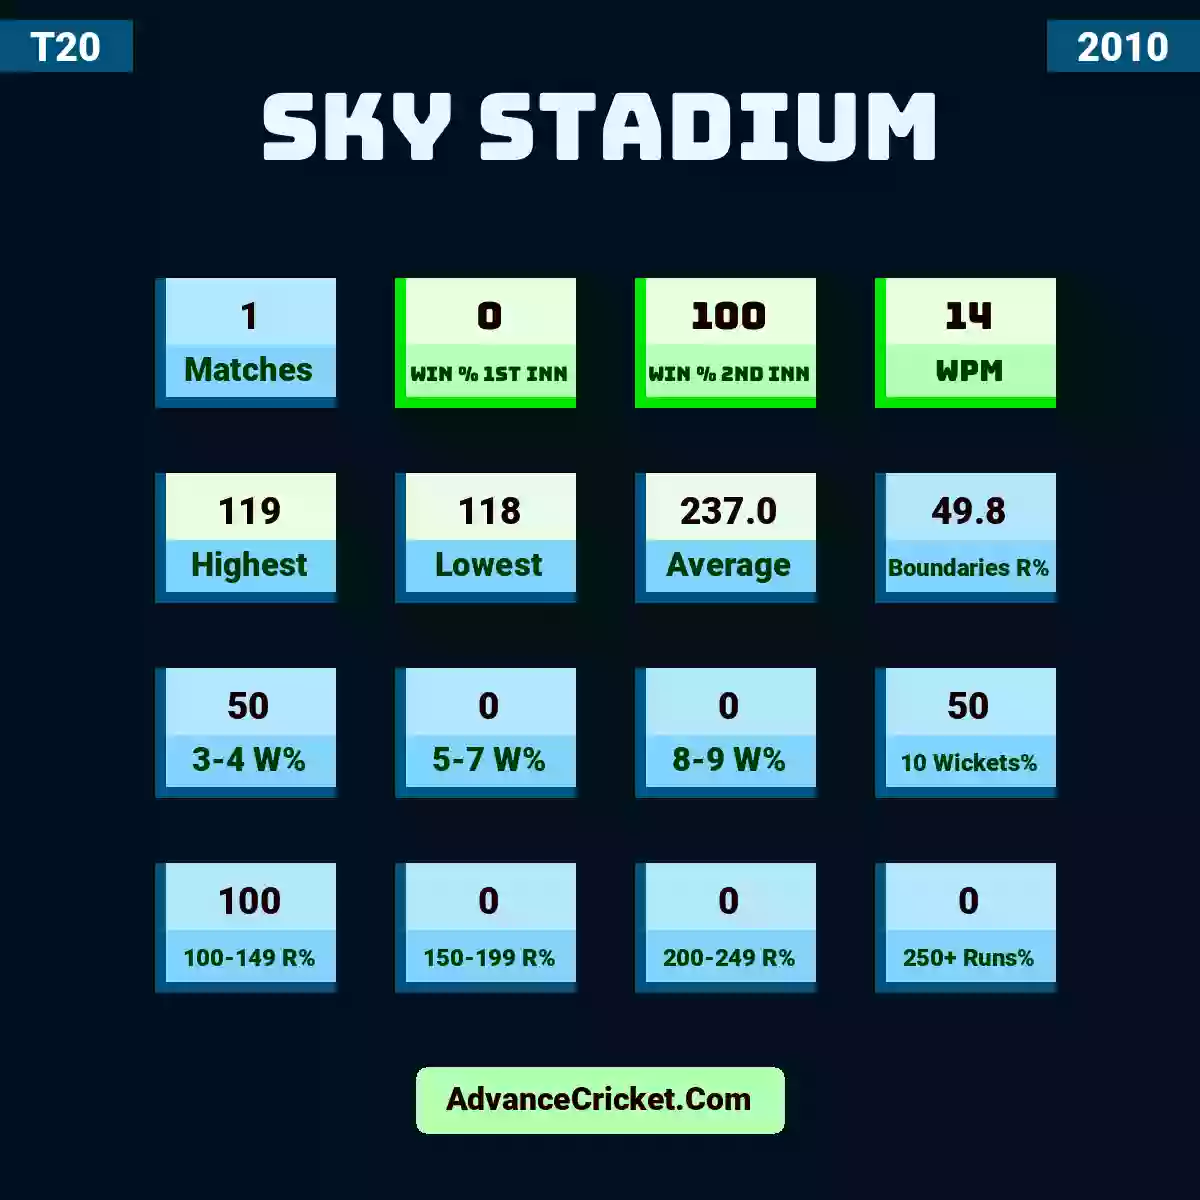 Image showing Sky Stadium with Matches: 1, Win % 1st Inn: 0, Win % 2nd Inn: 100, WPM: 14, Highest: 119, Lowest: 118, Average: 237.0, Boundaries R%: 49.8, 3-4 W%: 50, 5-7 W%: 0, 8-9 W%: 0, 10 Wickets%: 50, 100-149 R%: 100, 150-199 R%: 0, 200-249 R%: 0, 250+ Runs%: 0.